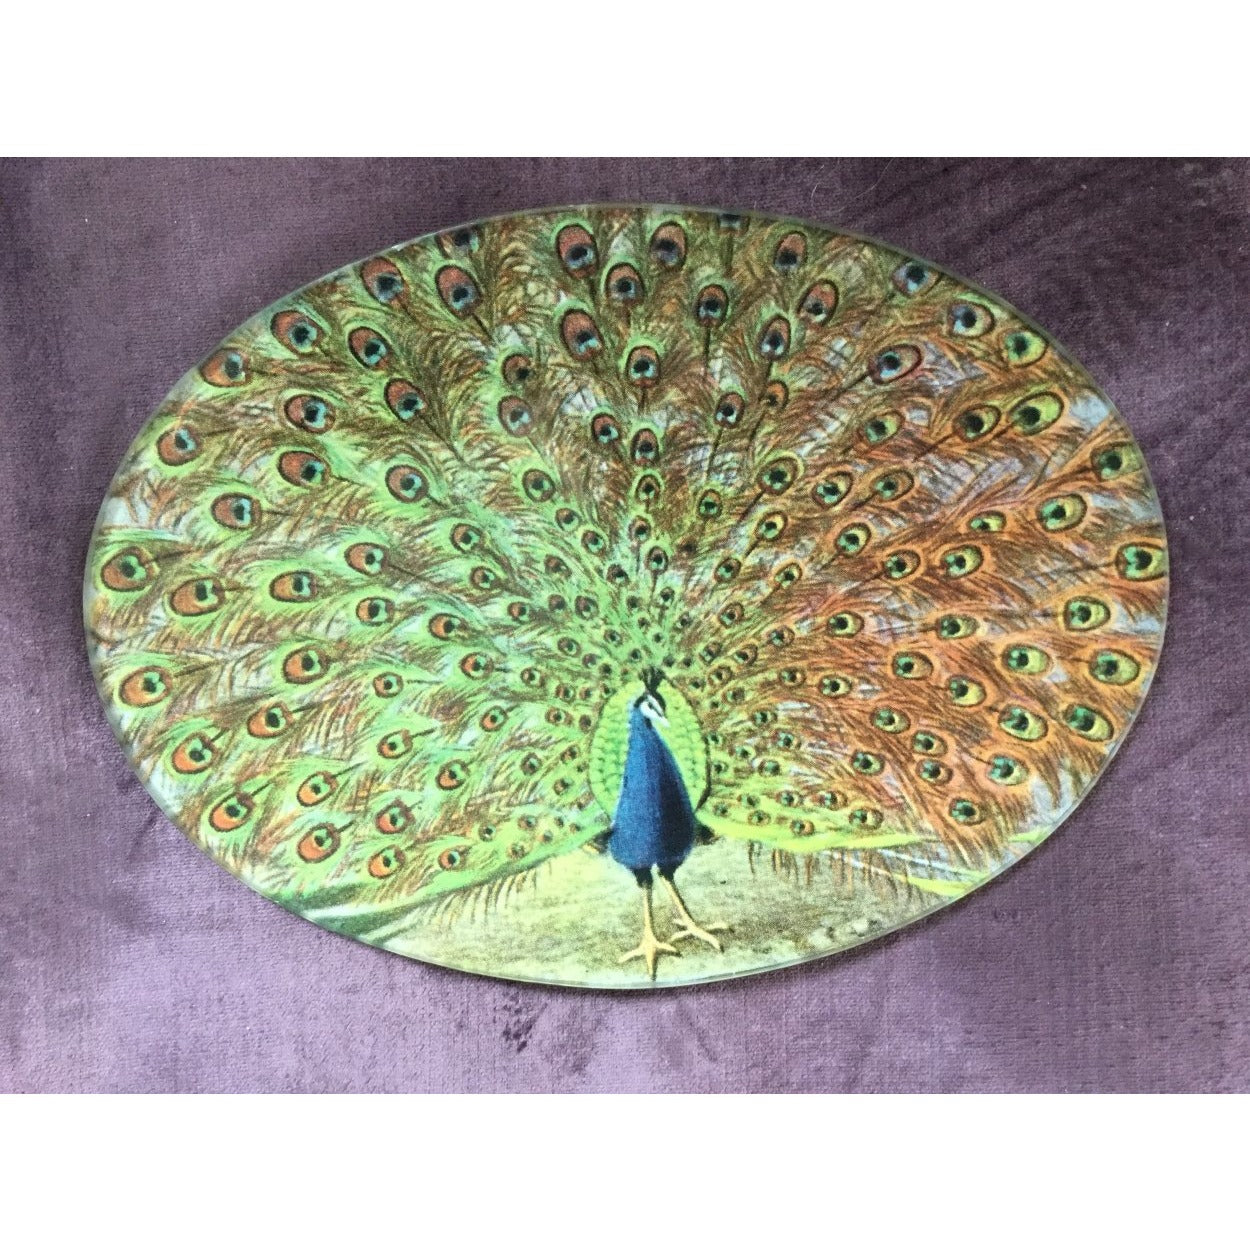 Vintage decoupage glass plate - "Fantastic Peacock"